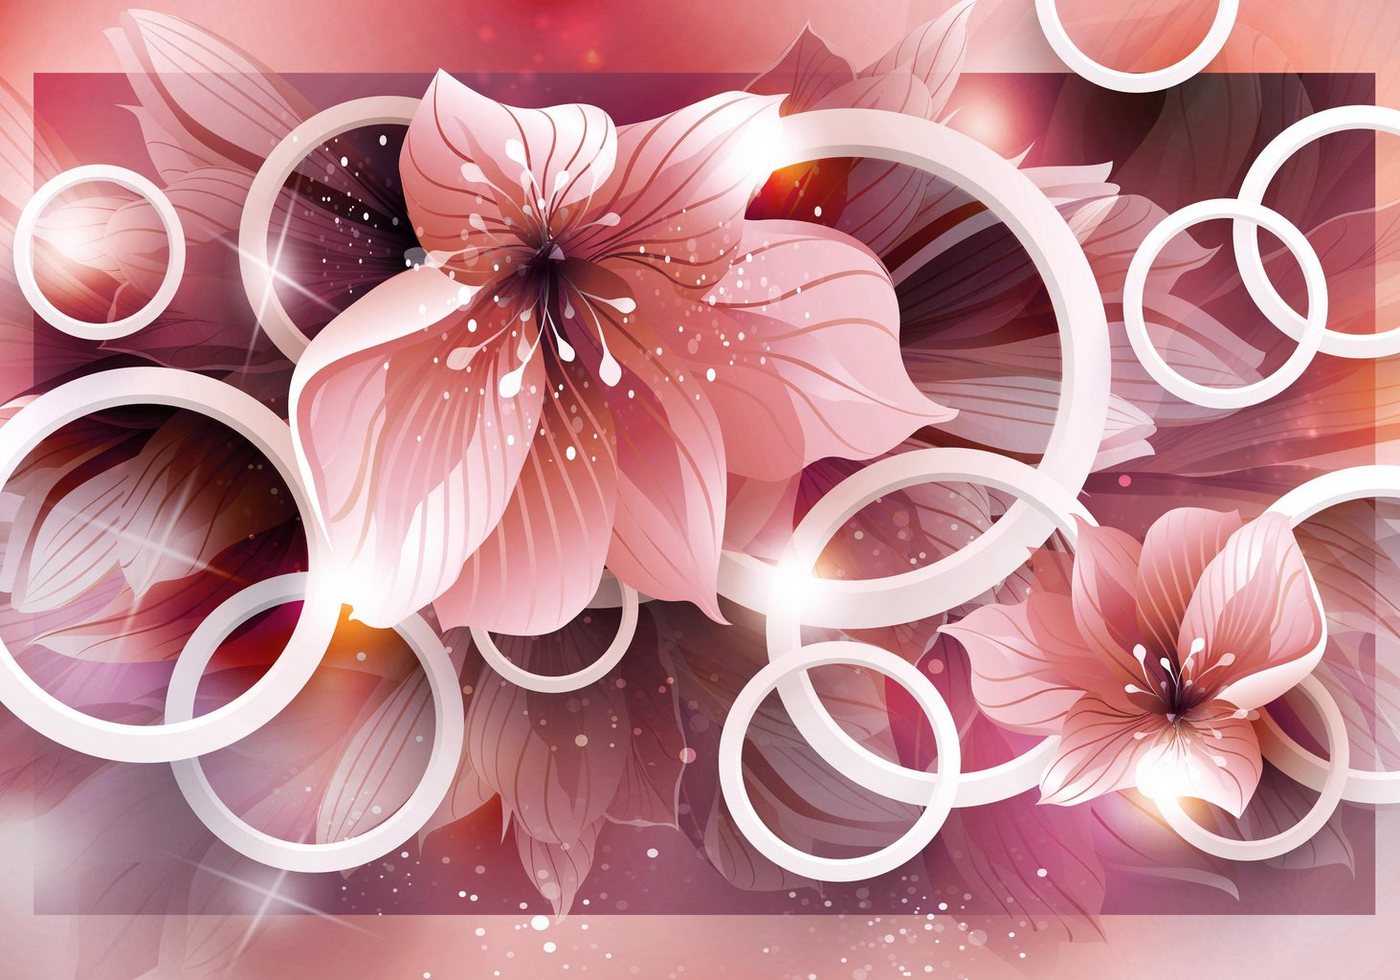 wandmotiv24 Fototapete Rosa Blumen 3D Kreise Blättern Glitzern, strukturiert, Wandtapete, Motivtapete, matt, Vinyltapete, selbstklebend von wandmotiv24